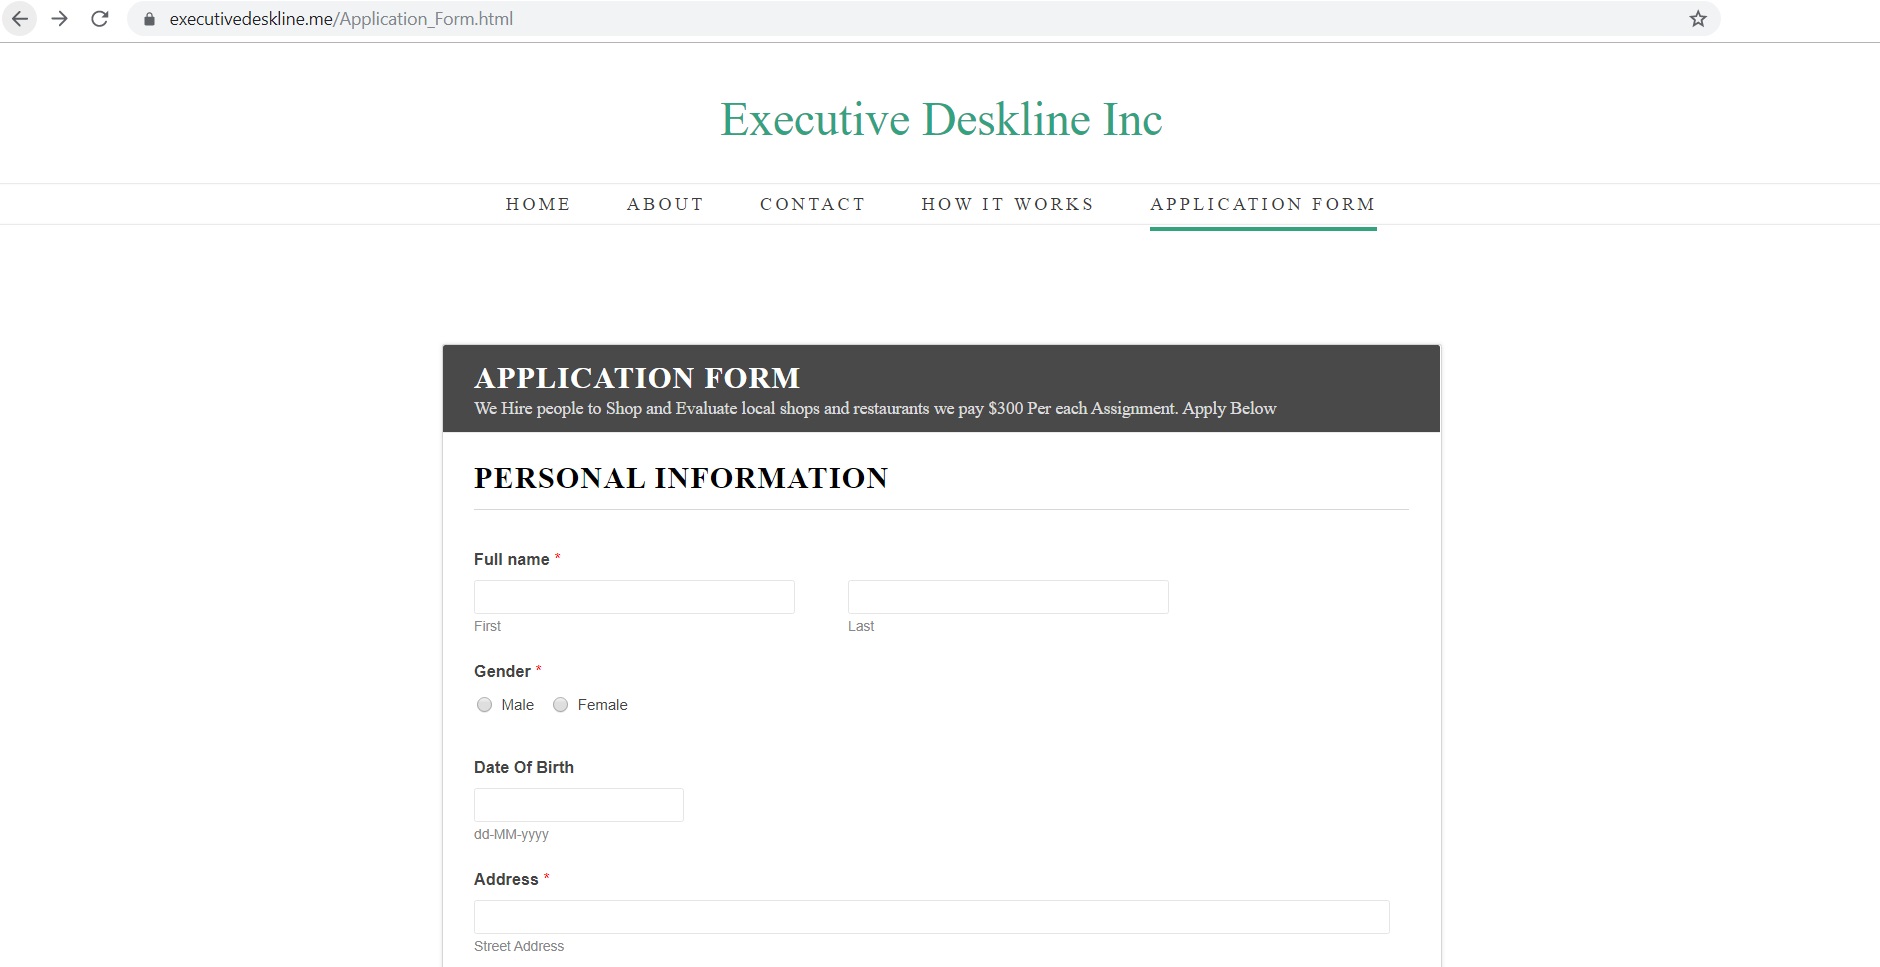 An Executive Deskline Inc Mystery Shoppers Website